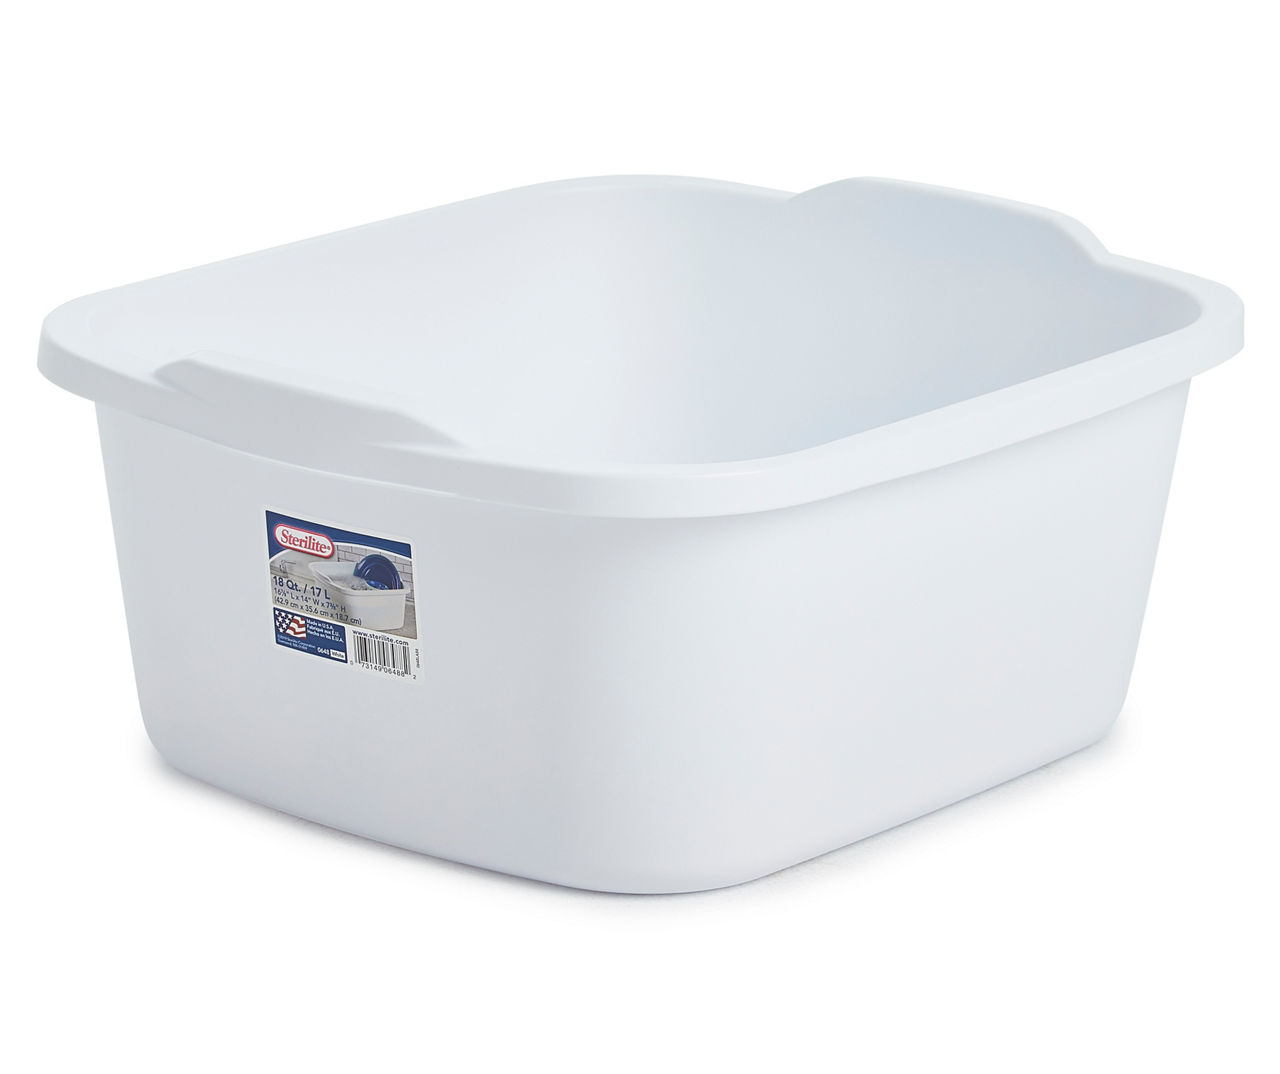 Sterilite 18 Quart Dishpan Plastic Basin Dish Pan New Made in USA White, 2  Pack